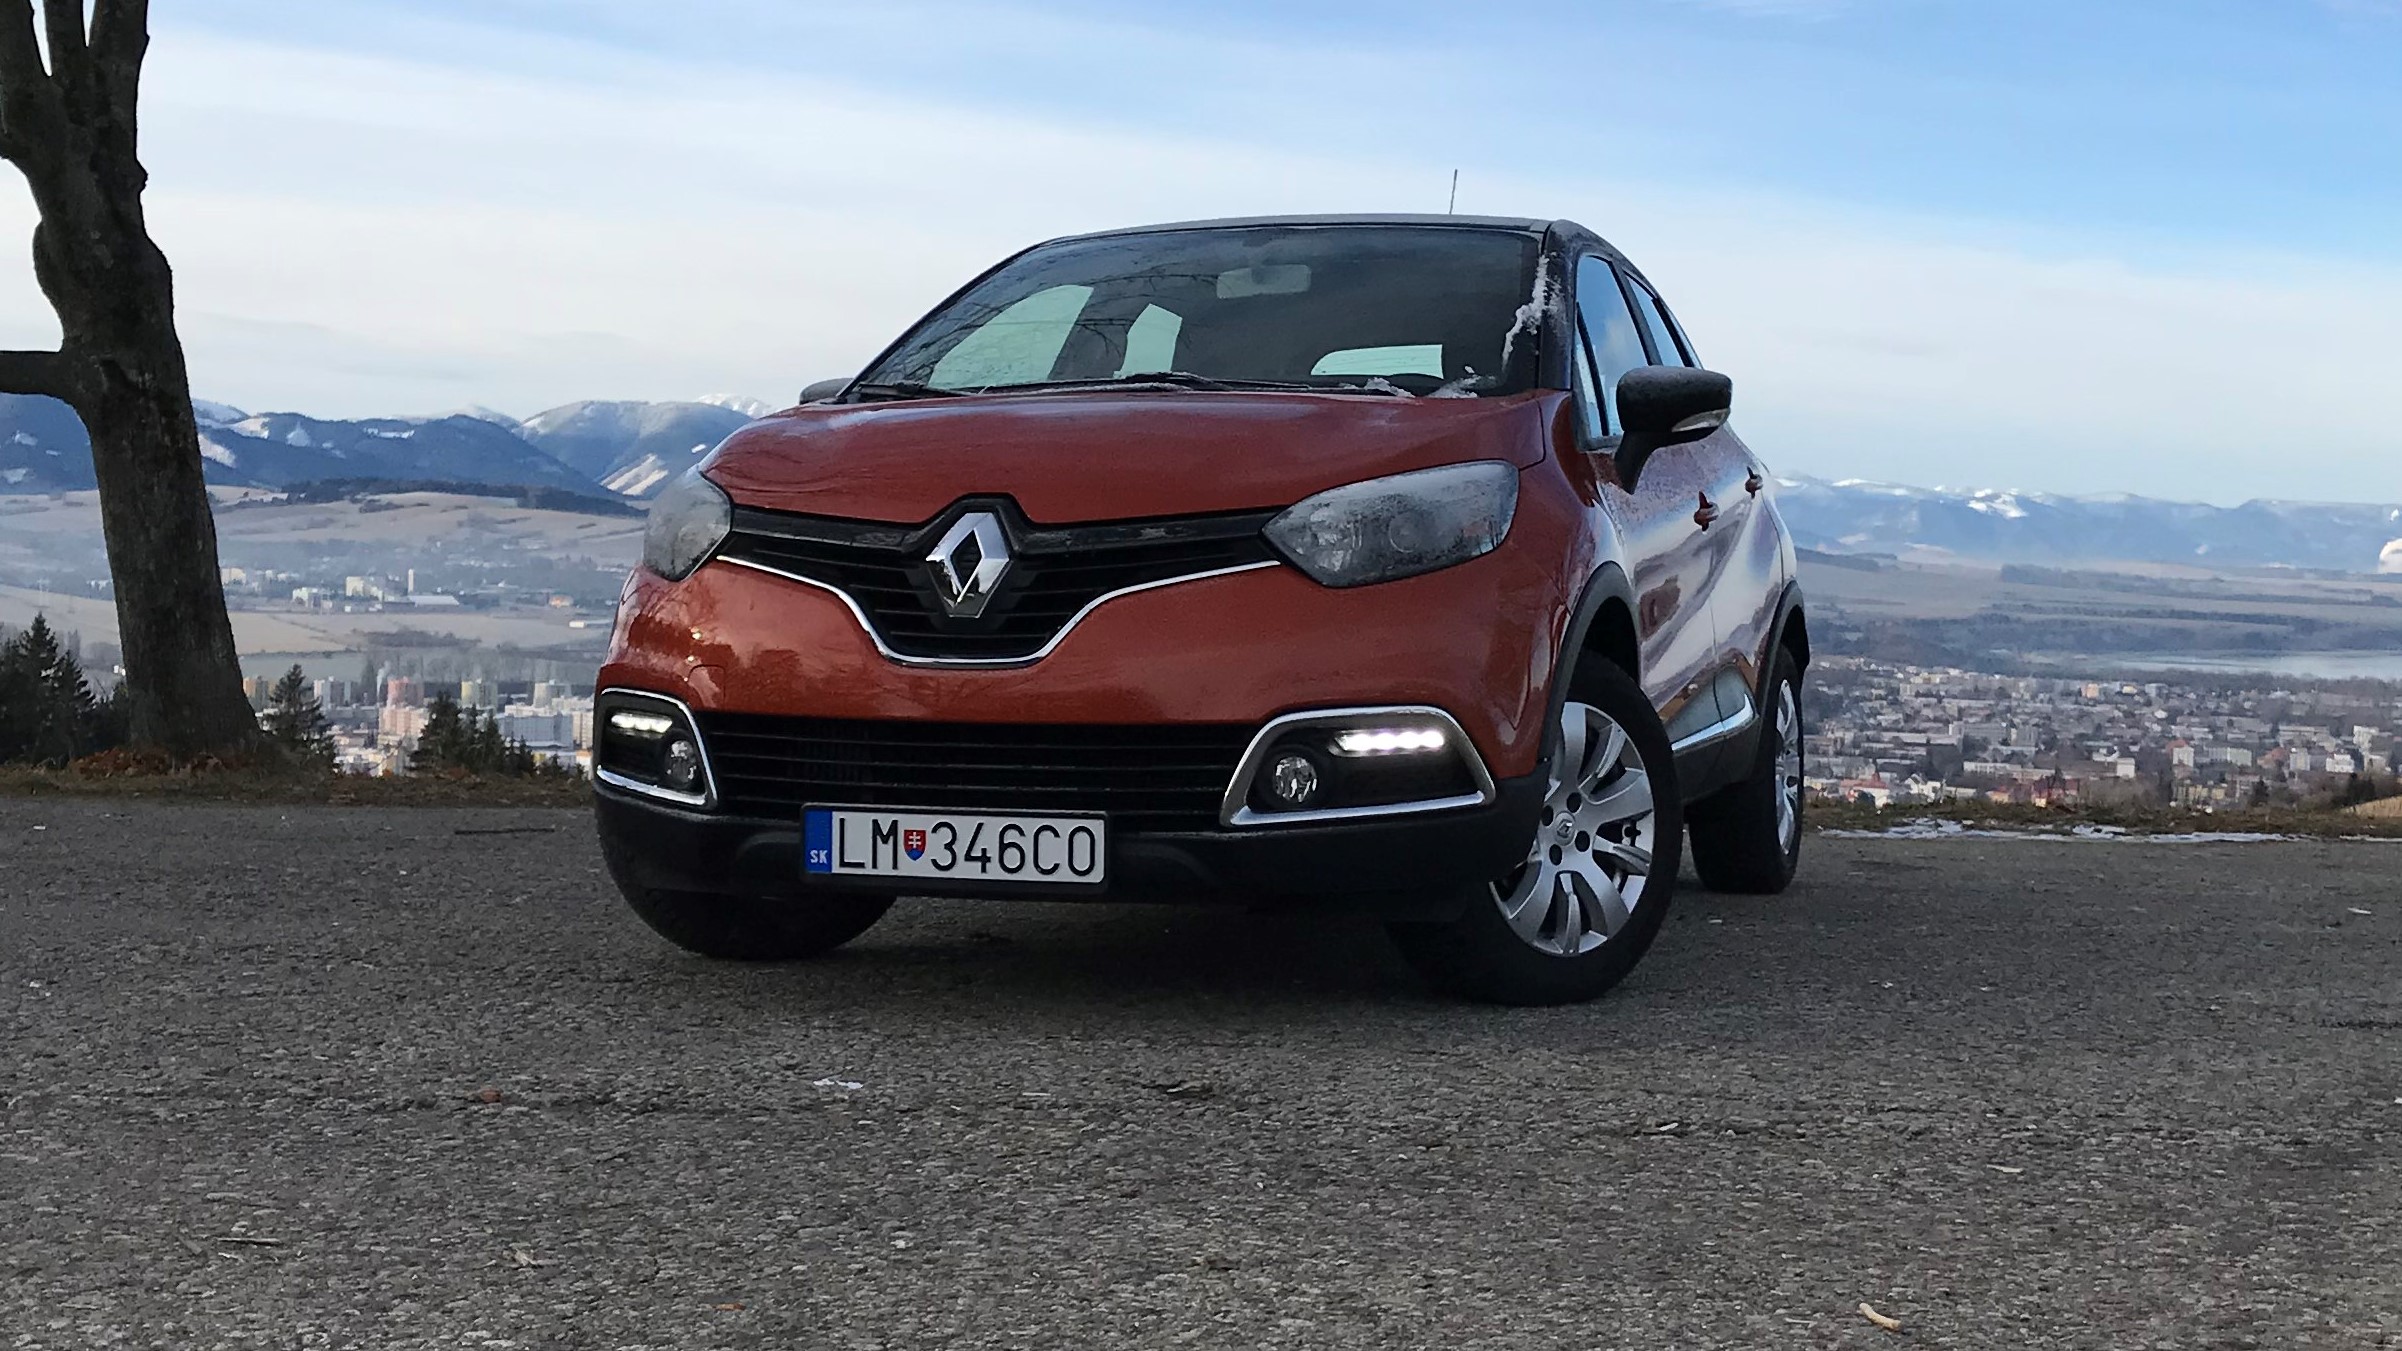 2015 Renault Captur 0,9 TCe test recenzia skúsenosti